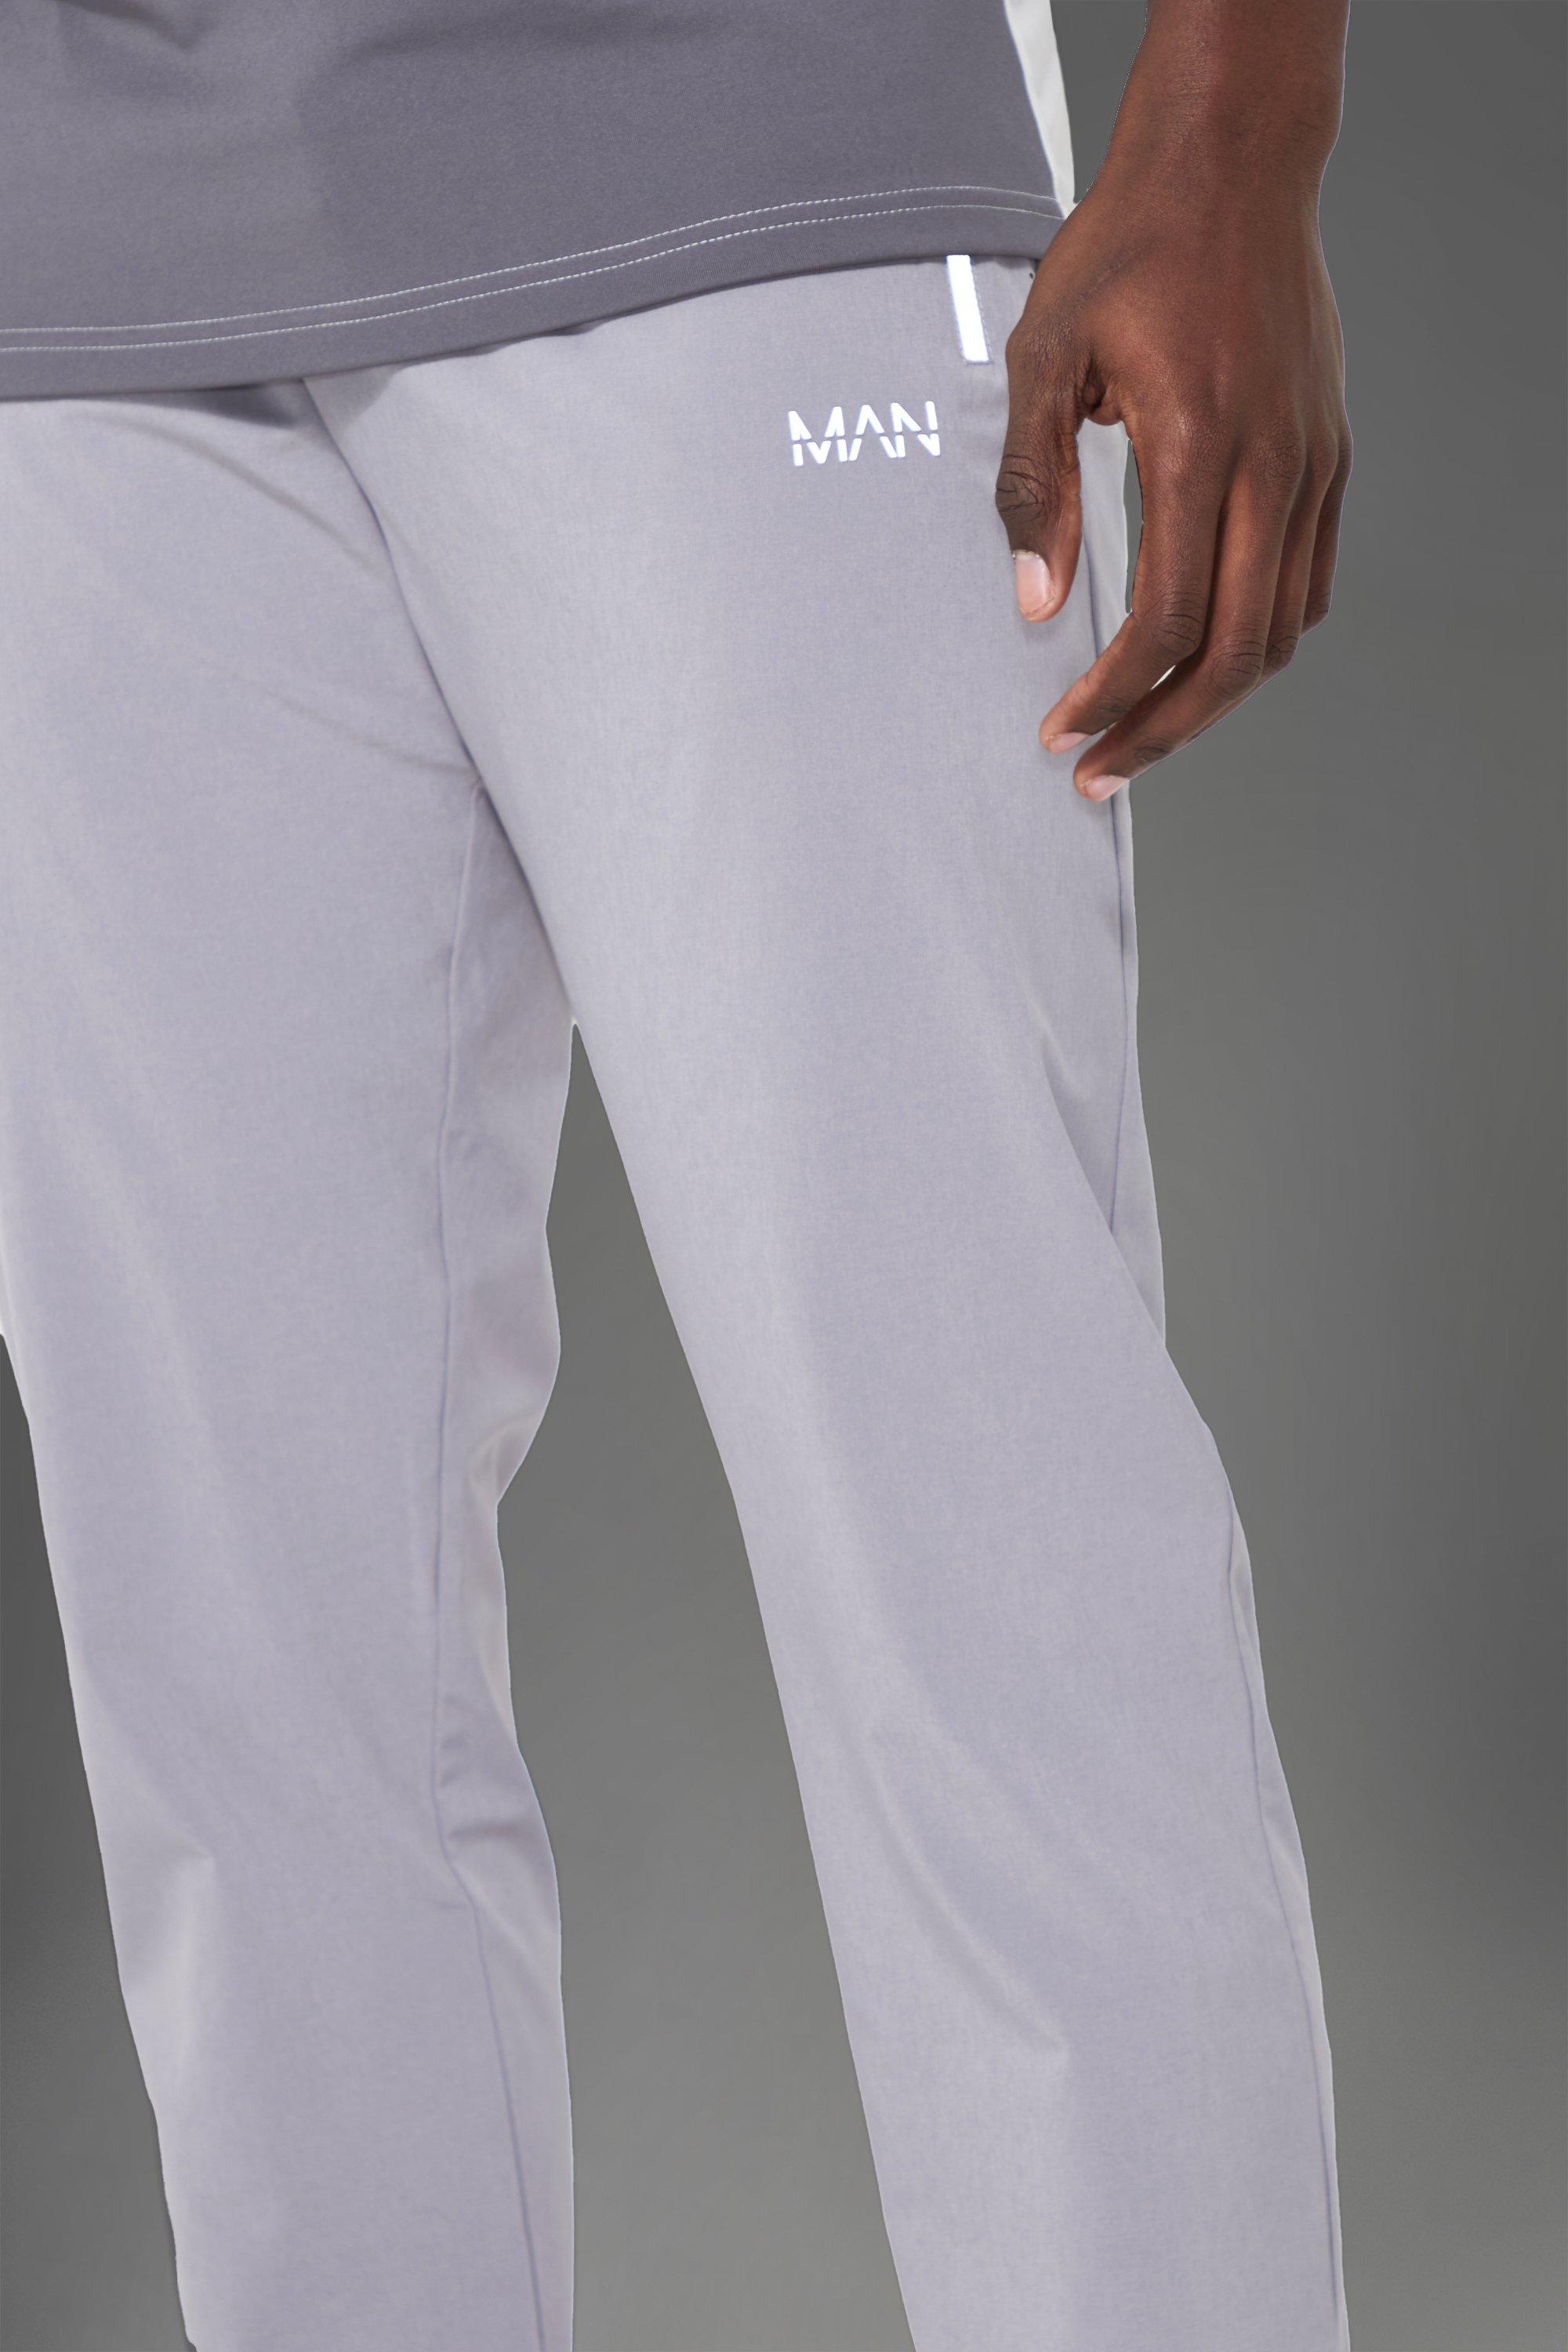 Avia Jogger Active Pants for Men